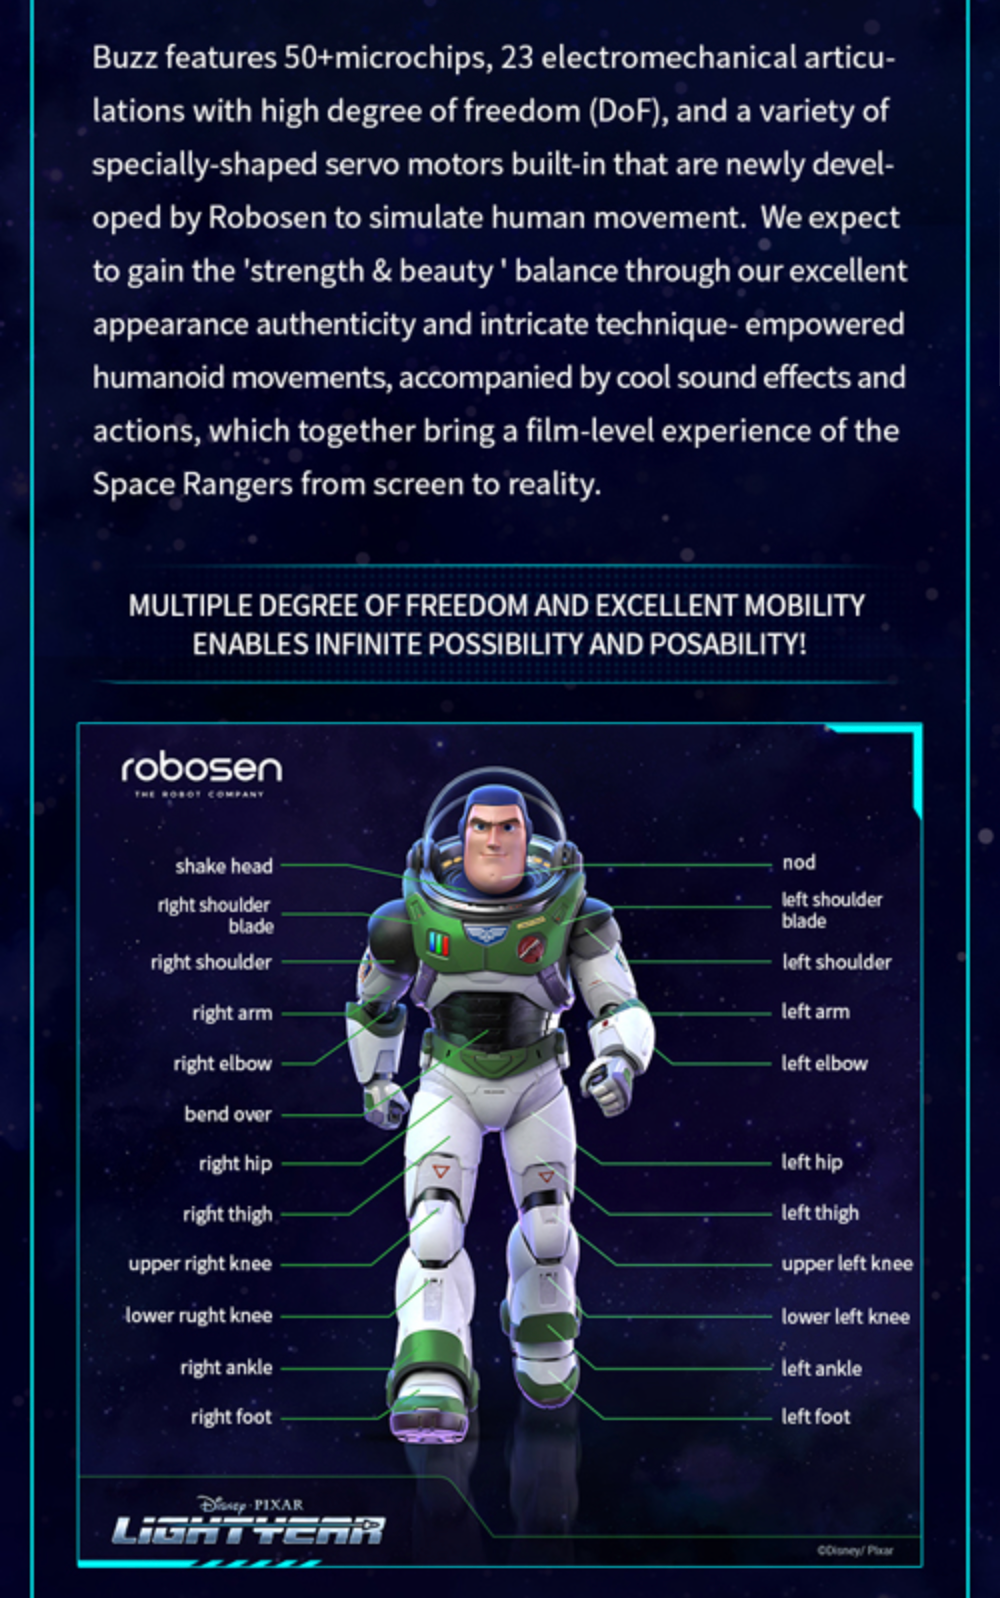 robosen - Buzz Lightyear Programmable Robot - Limited Edition Infinity Pack - Marvelous Toys